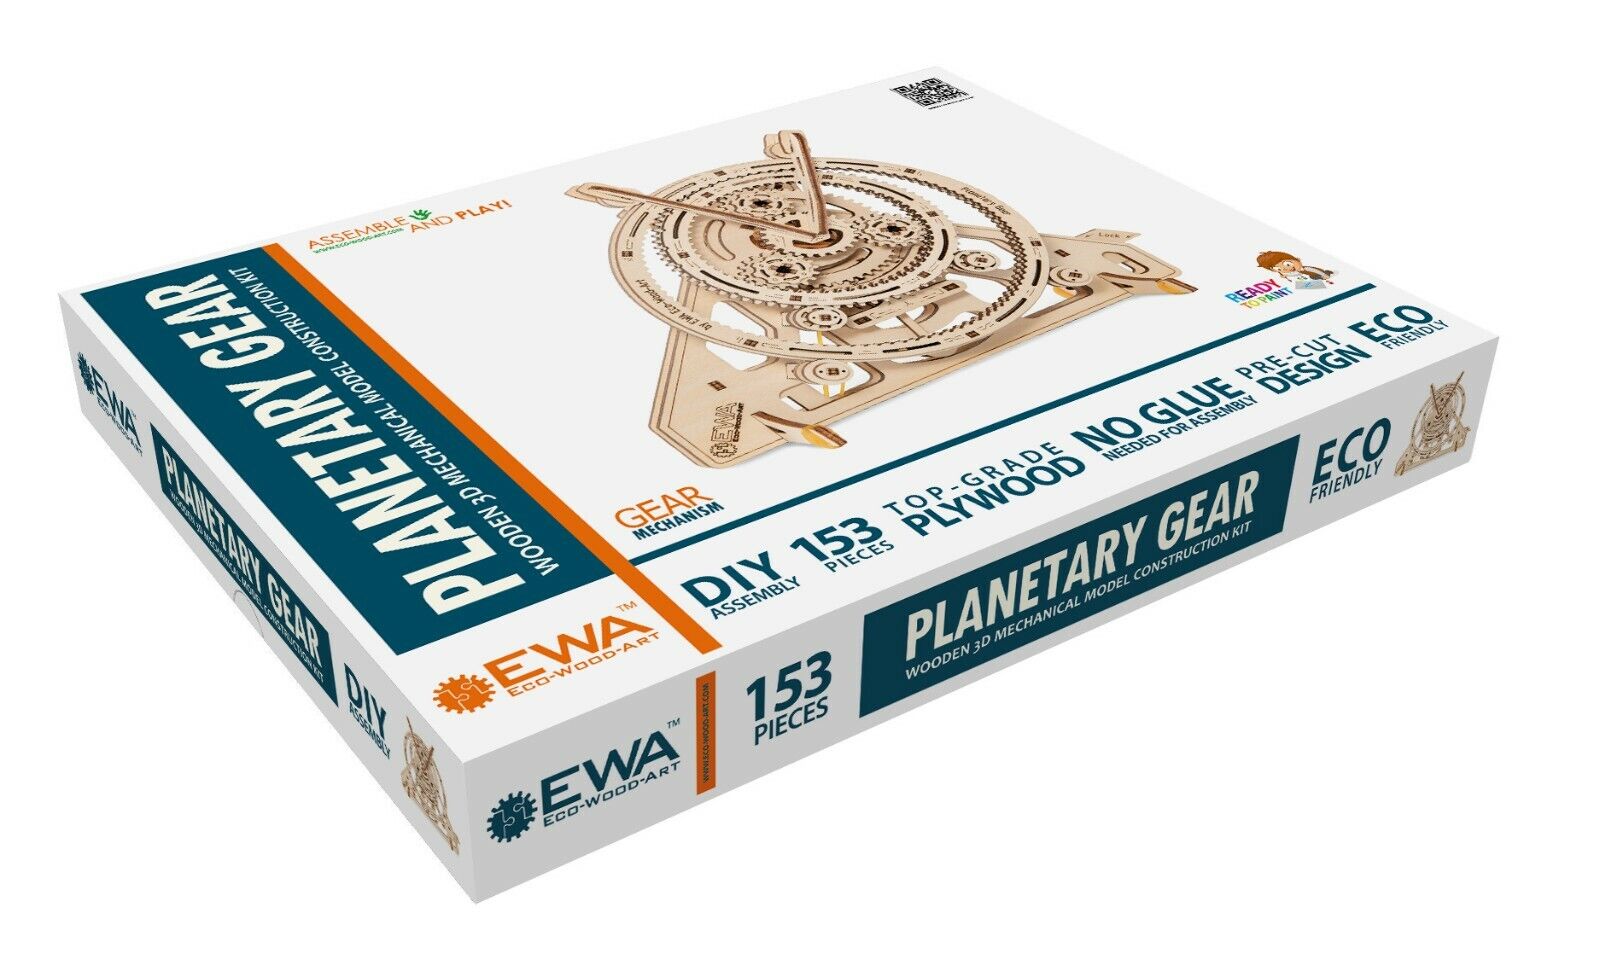 Planetary Gear Mechanic Wood Puzzle Eco Wood Art--